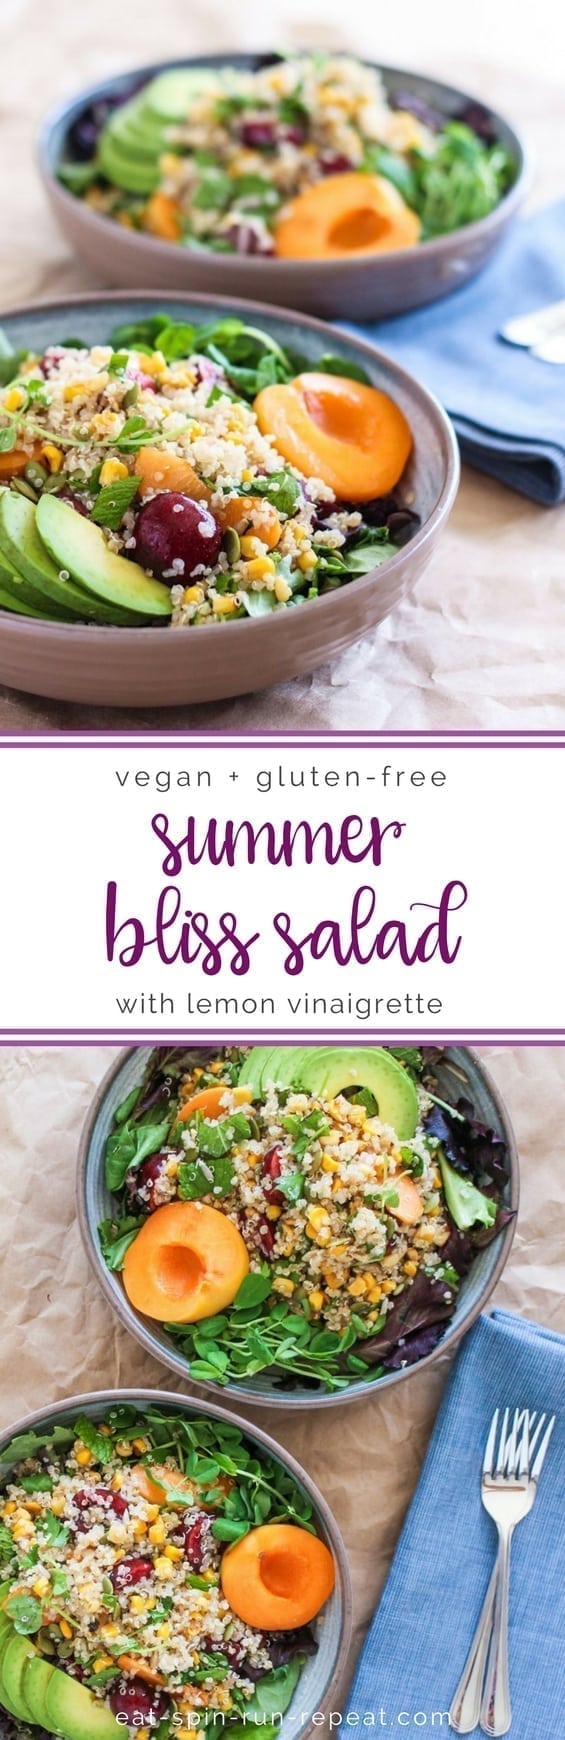 Summer Bliss Salad - vegan + gluten-free || Eat Spin Run Repeat